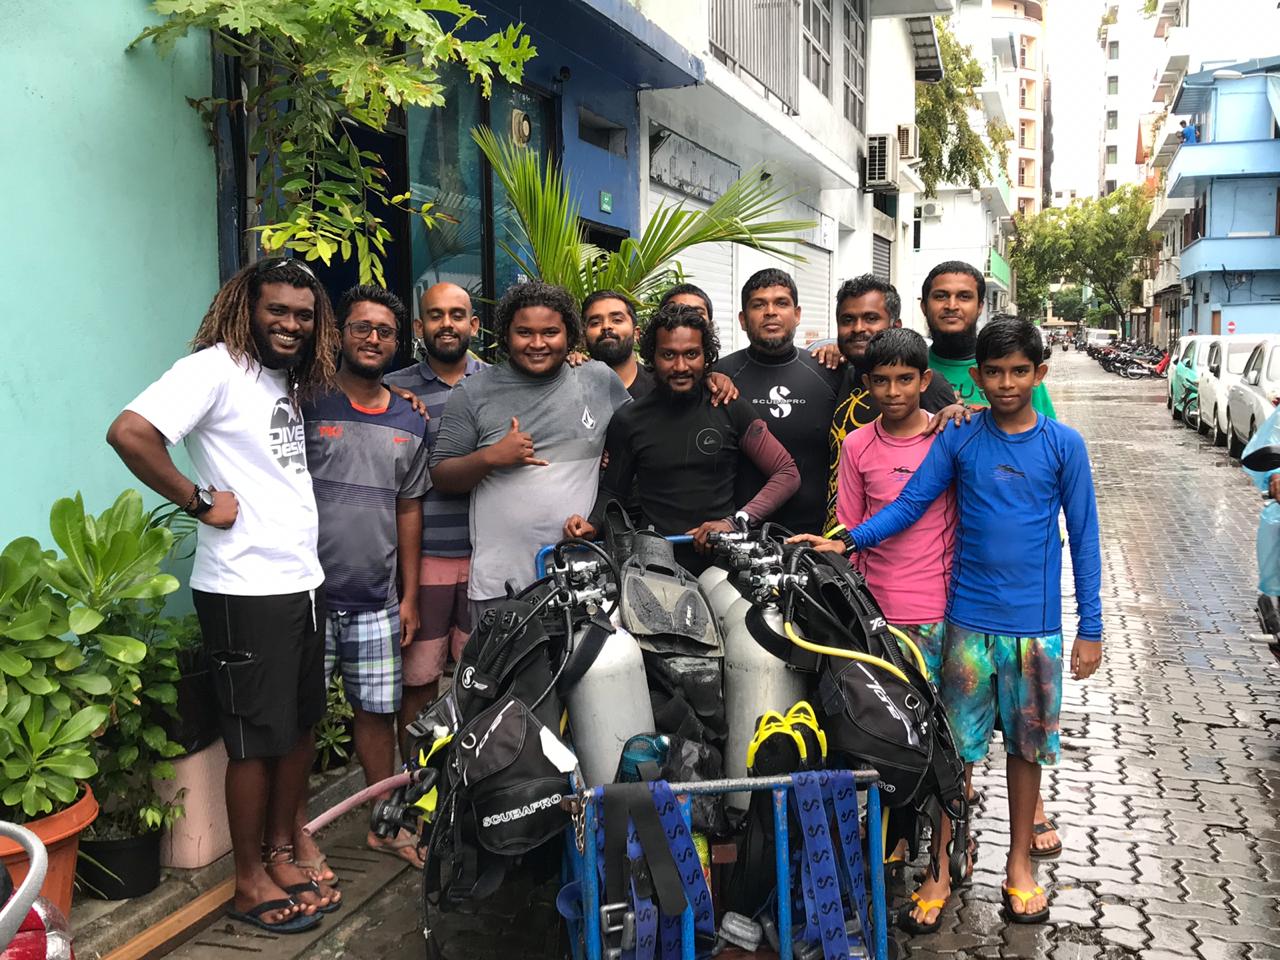 Adam Ashraf and his team at Dive Desk, Maldives